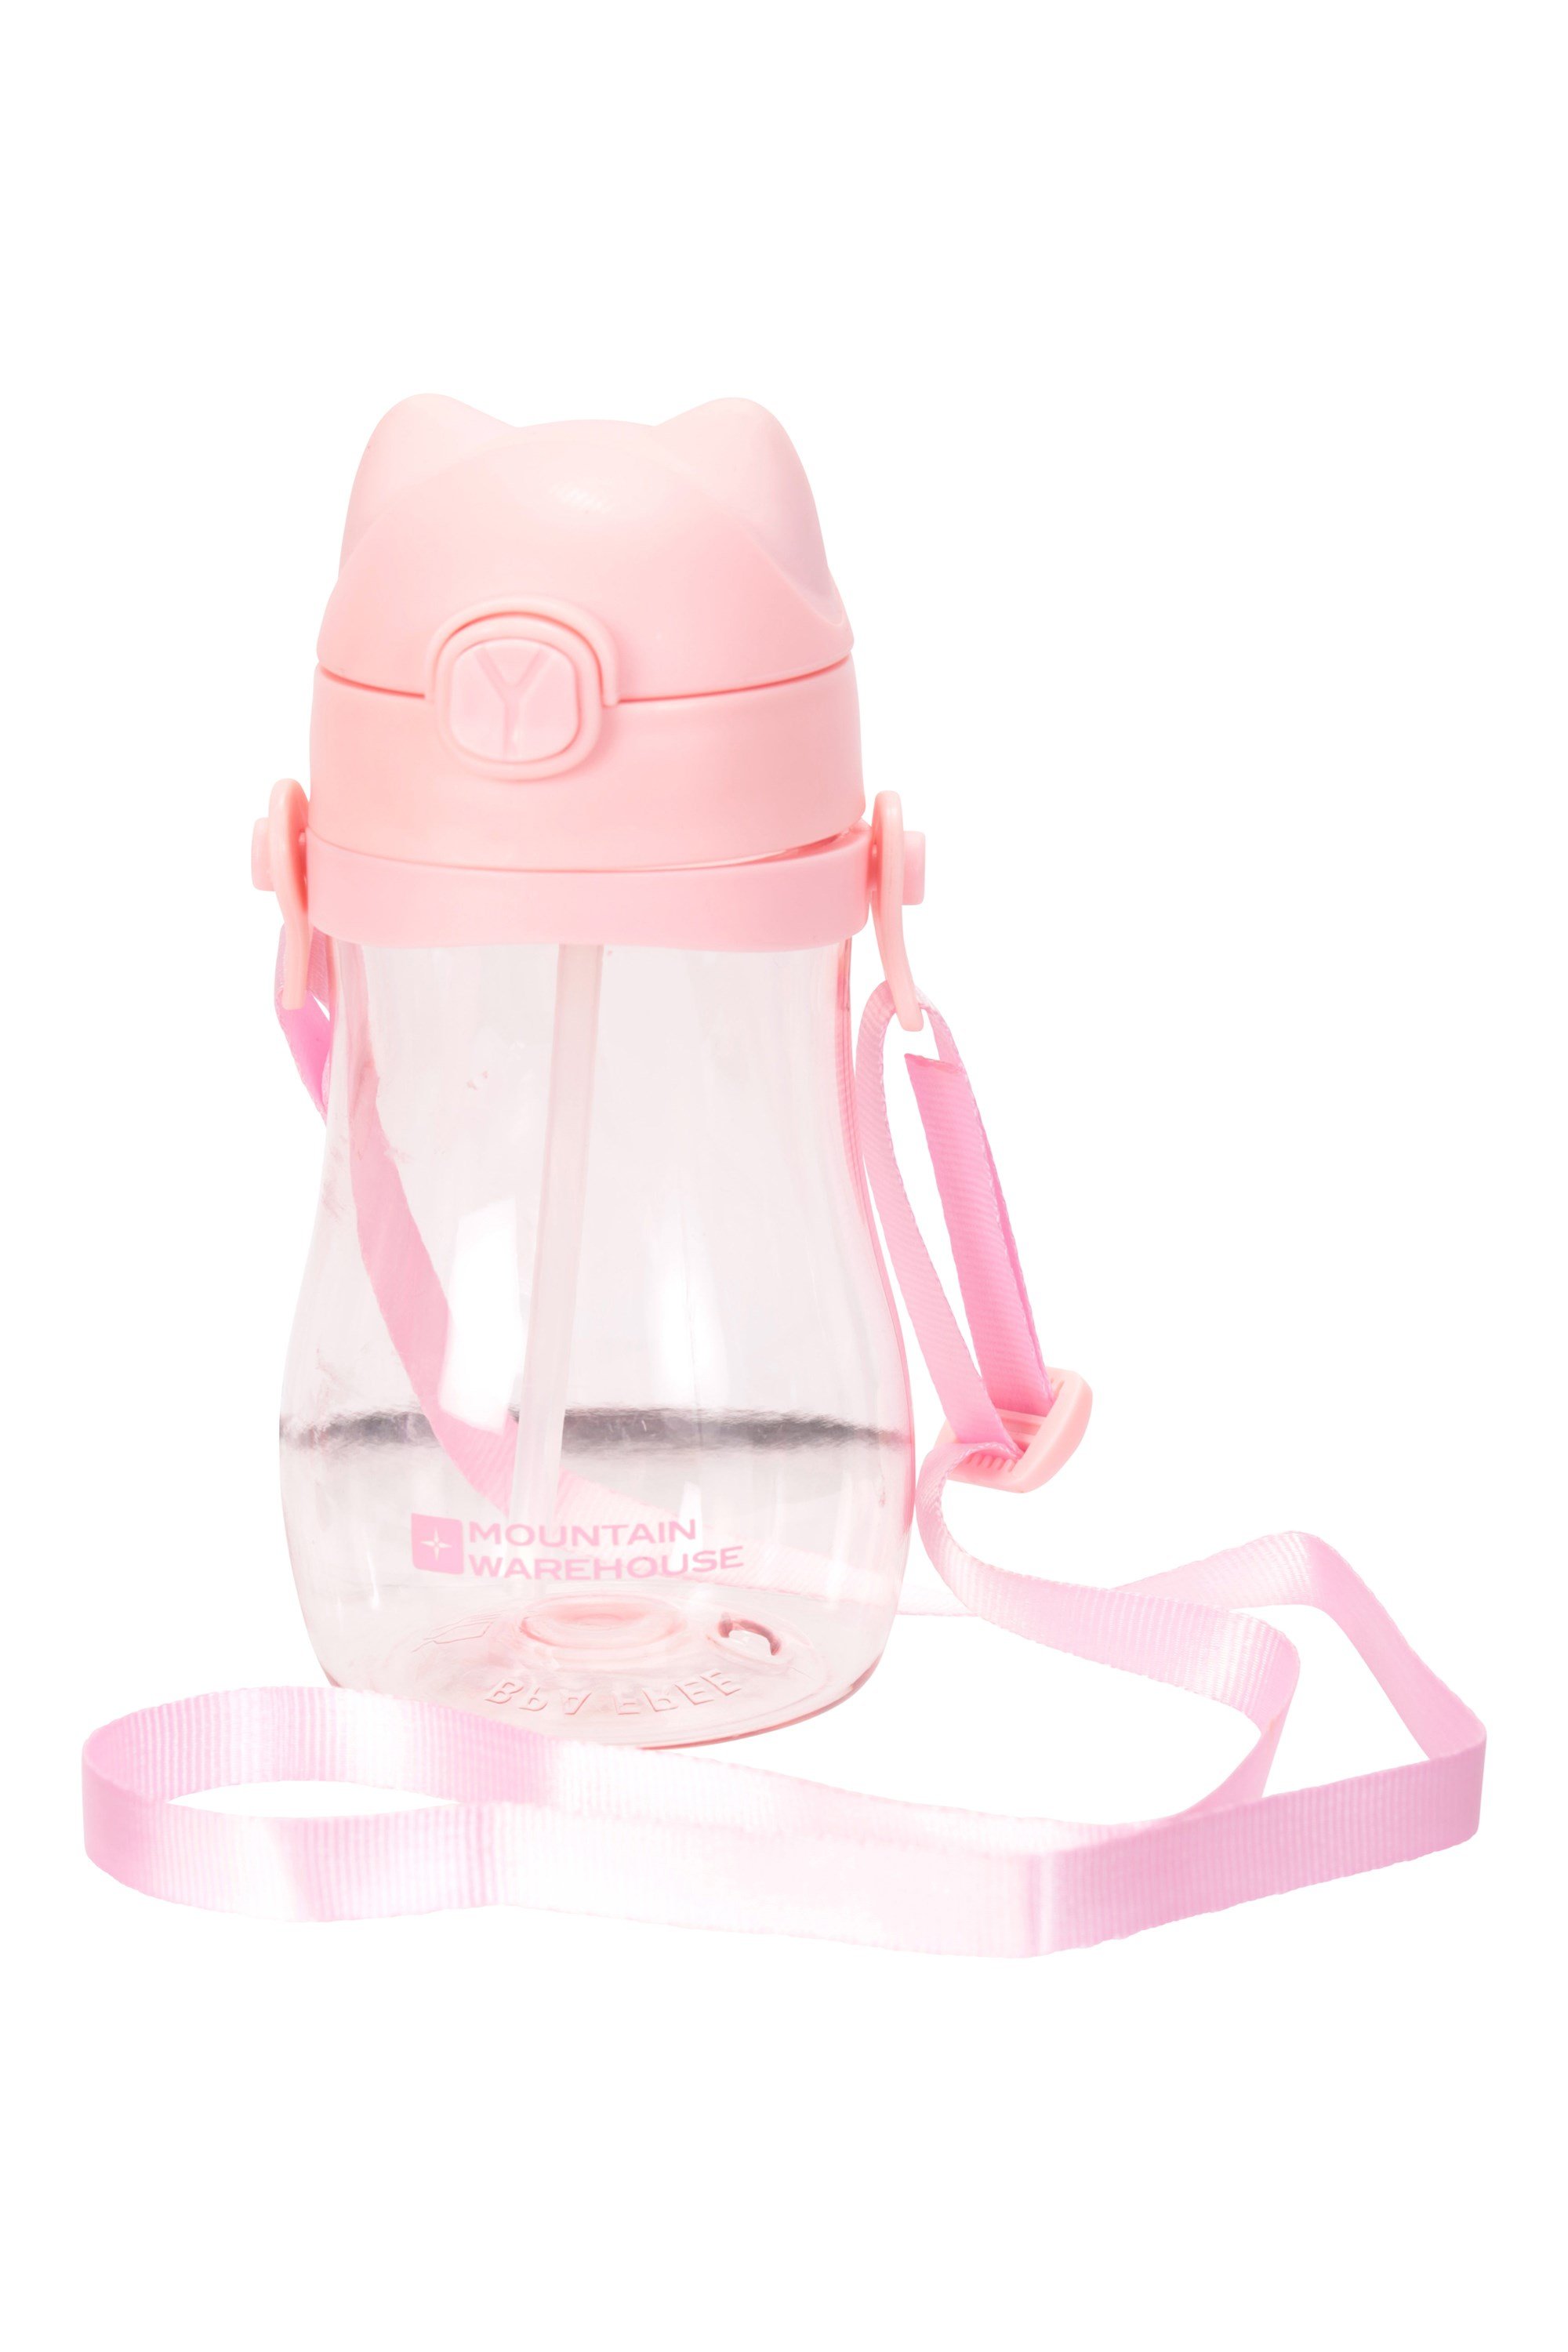 Bpa-free Flip Lid Water Bottle With Ears - 400ml - Pink